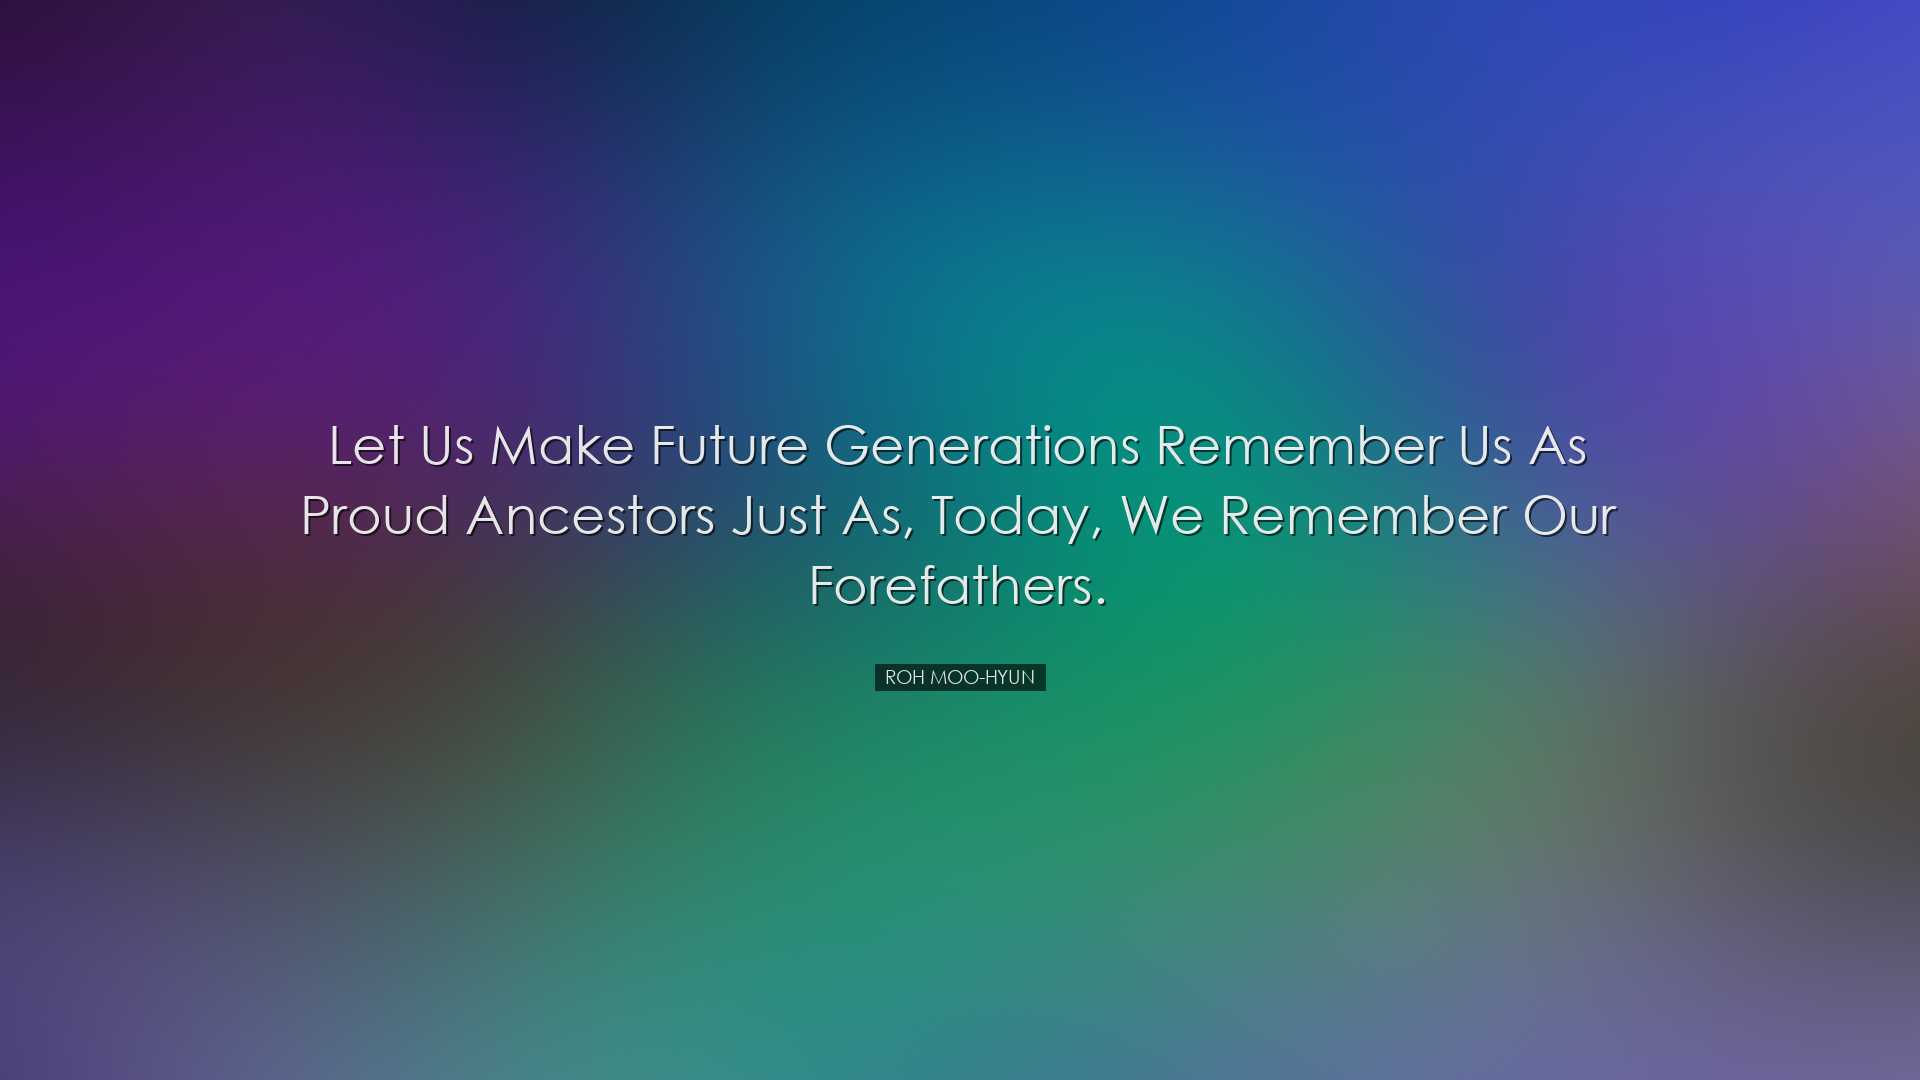 Let us make future generations remember us as proud ancestors just